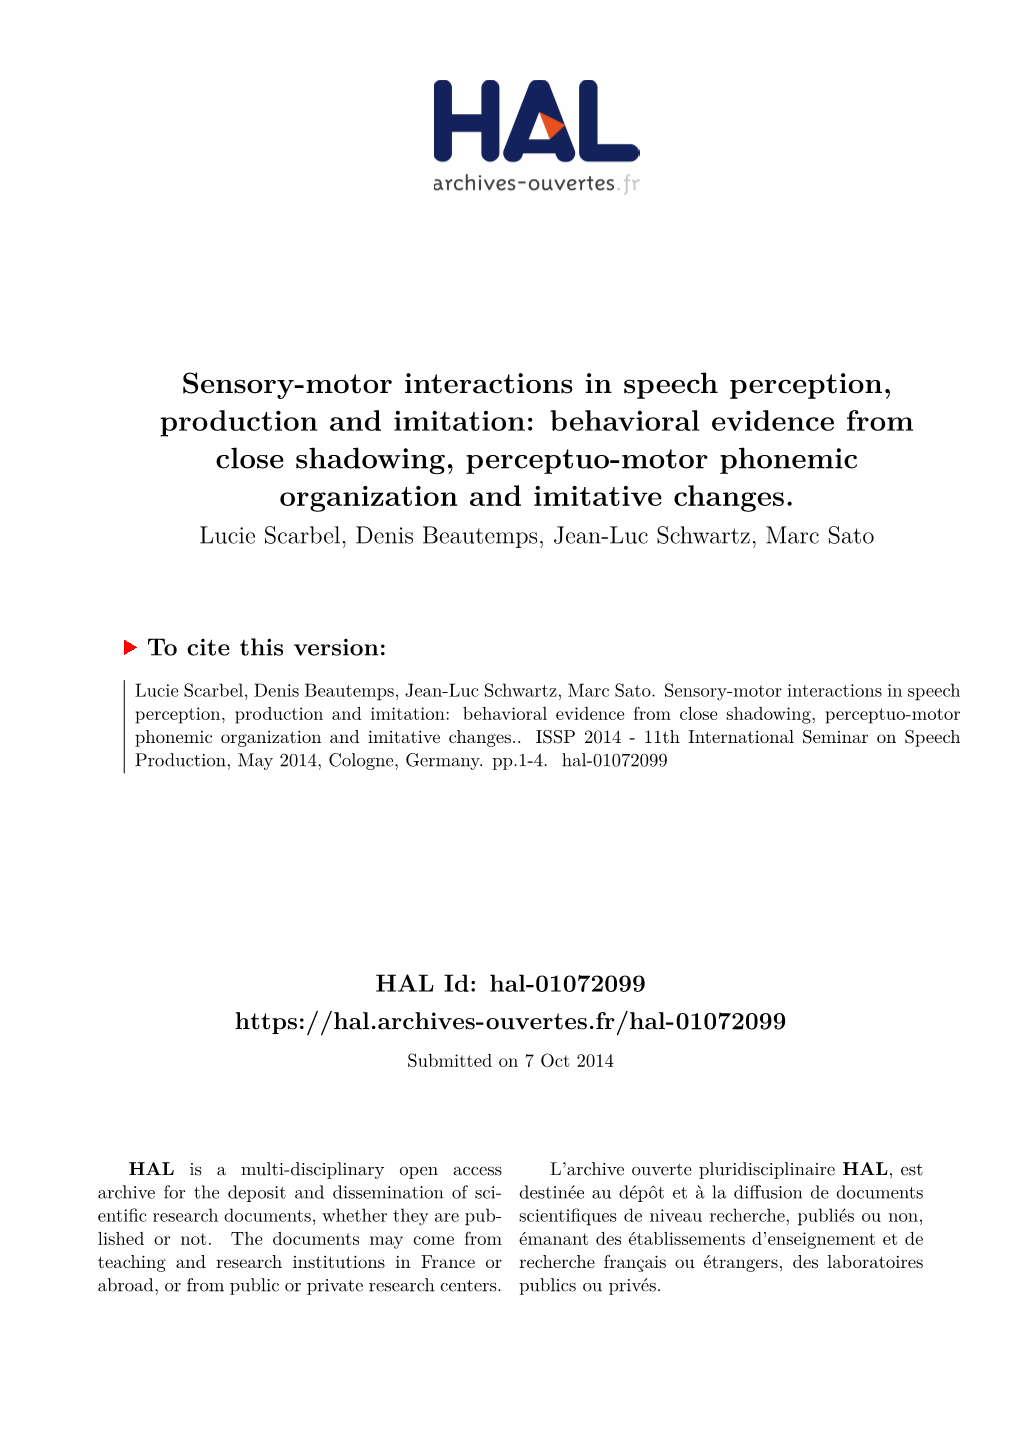 Sensory-Motor Interactions in Speech Perception